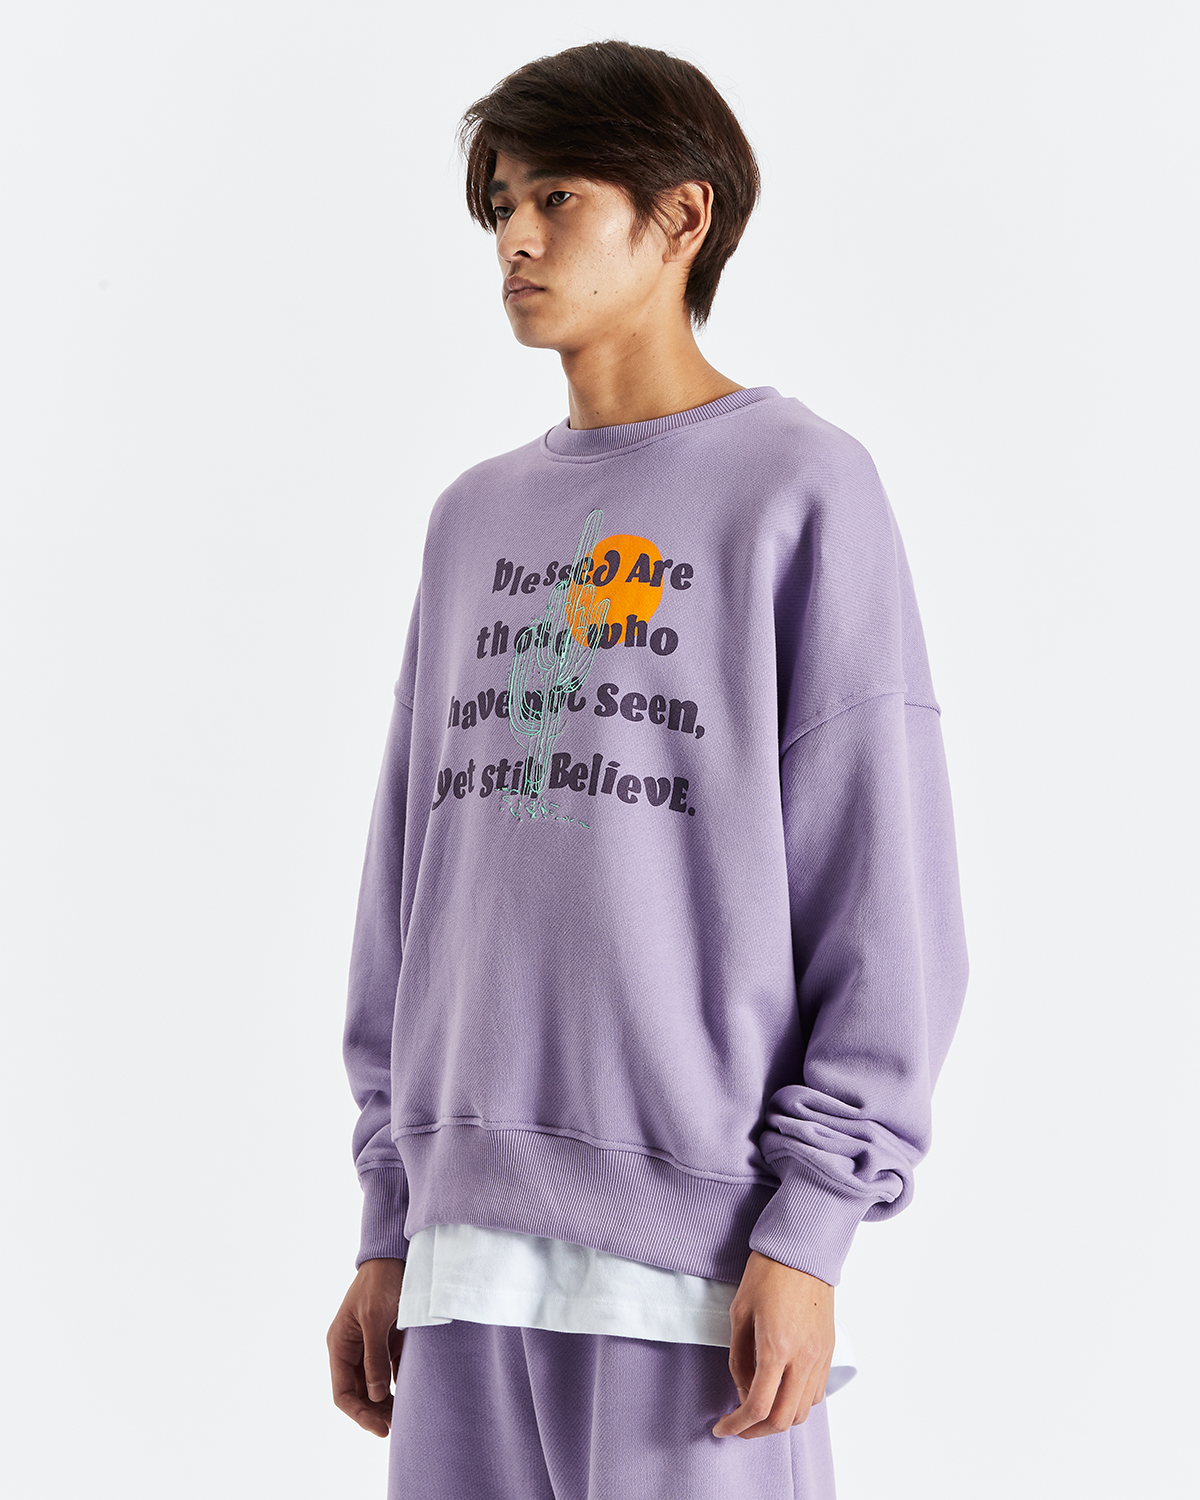 Lavender Blessed Sweatshirt